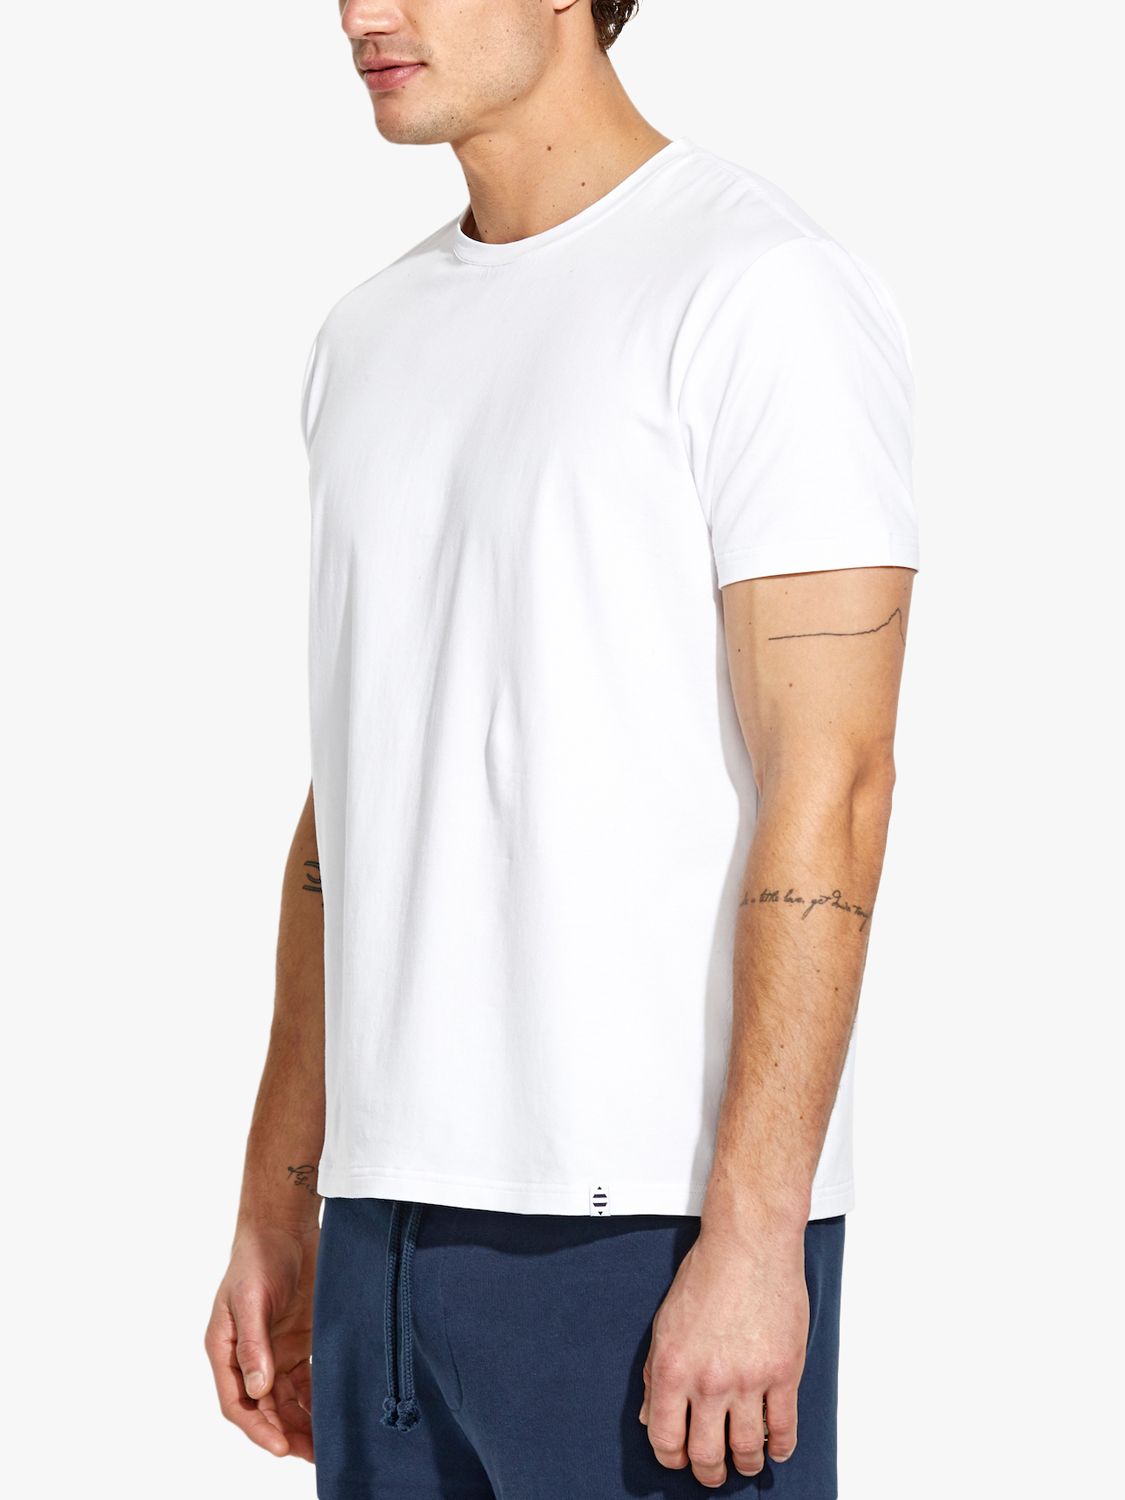 Panos Emporio Organic Cotton Blend T-Shirt, White, L